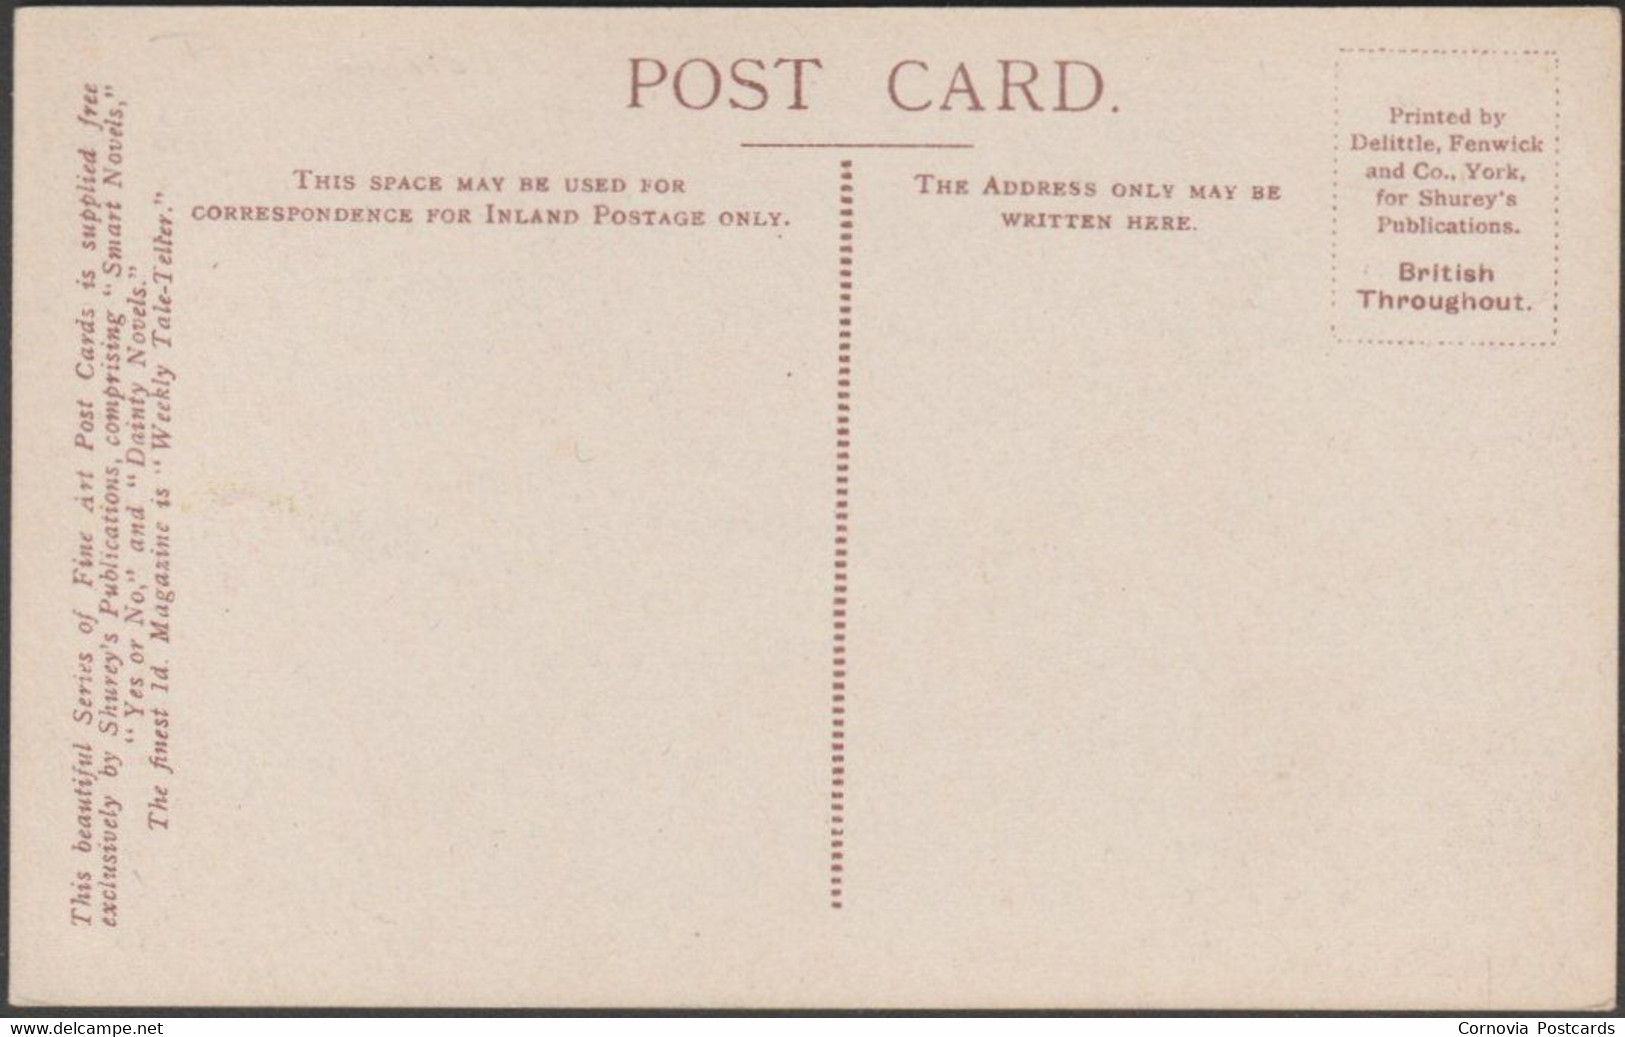 Uppingham, Rutland, C.1905-10 - Shurey's Postcard - Rutland